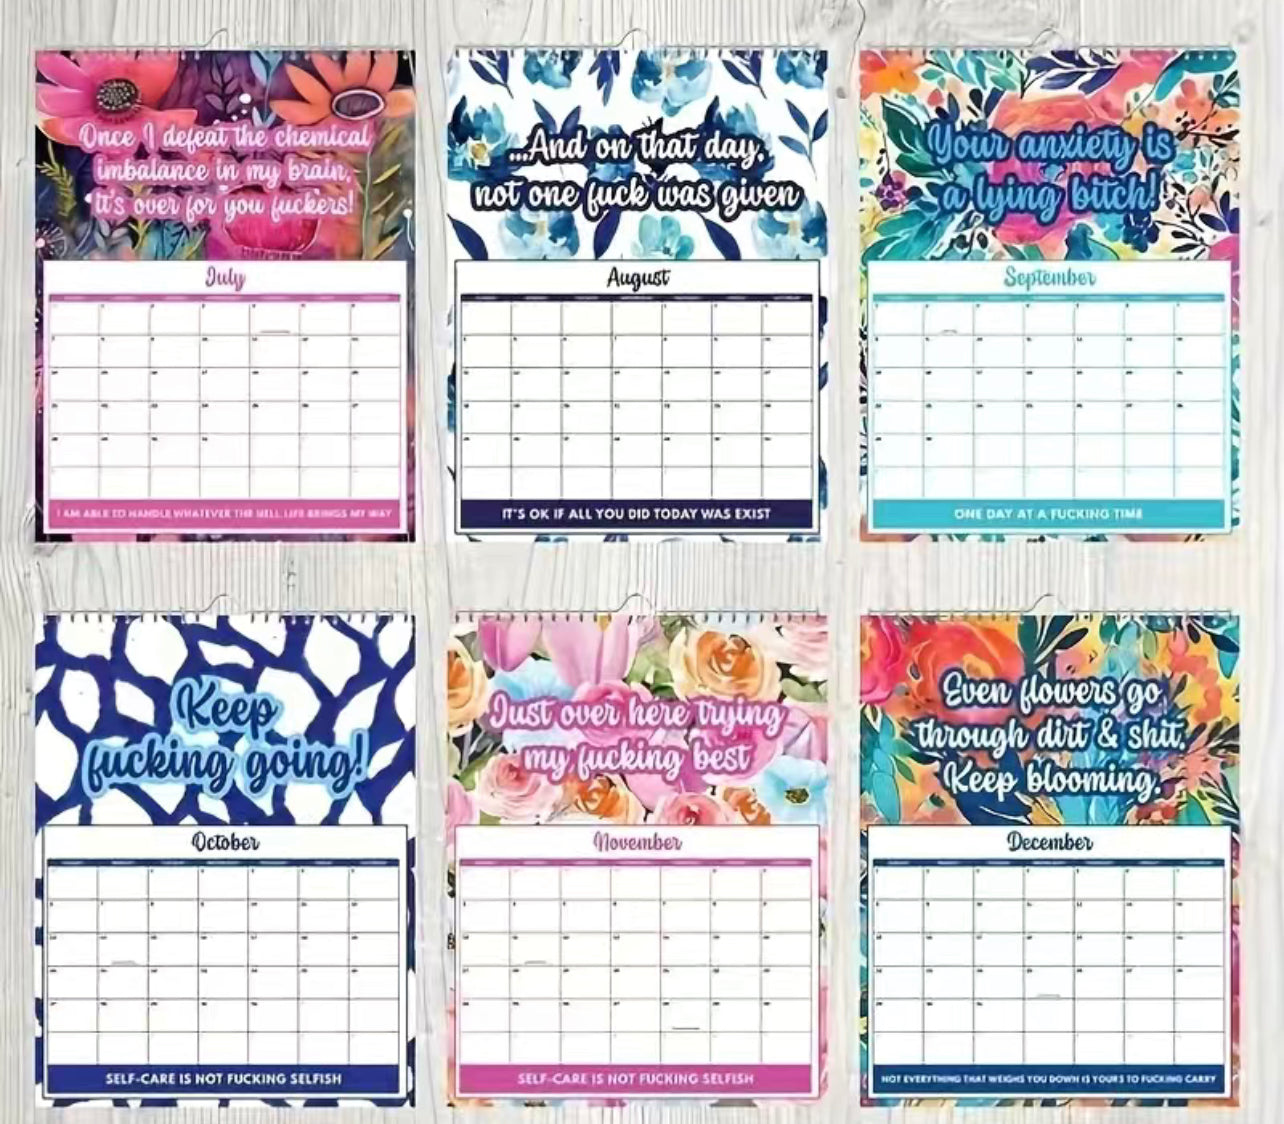 1pc, 2024 Calendar, Personal Planning Calendar, Fun Mental Health Calendar